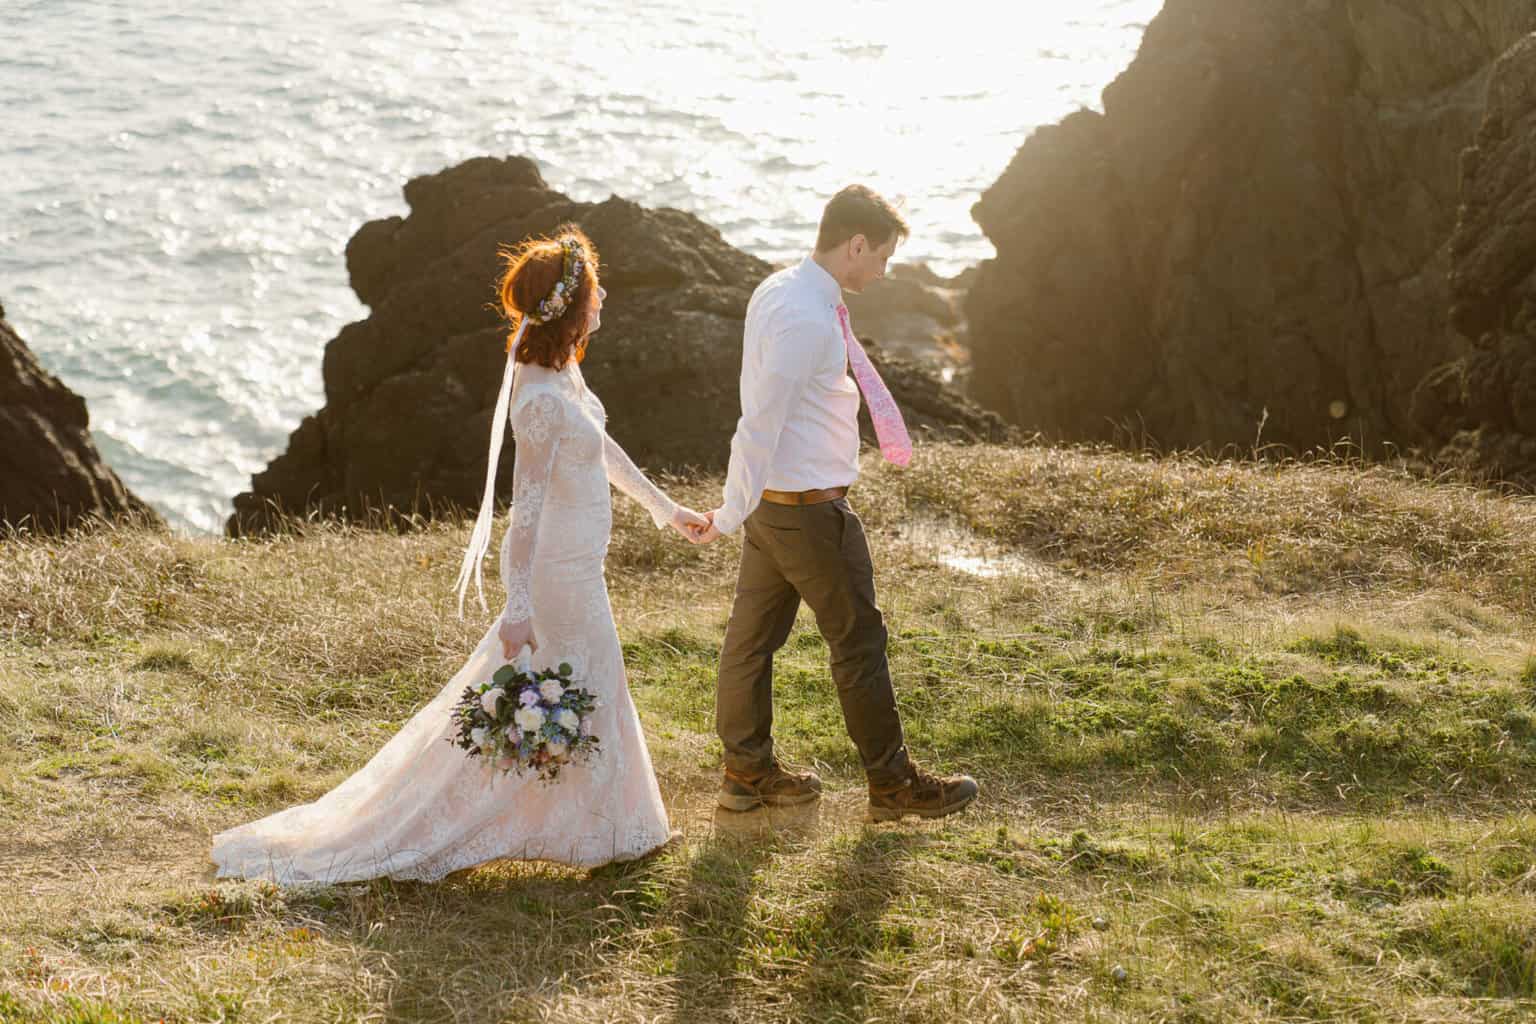 Oregon rocky coastline for your elopement